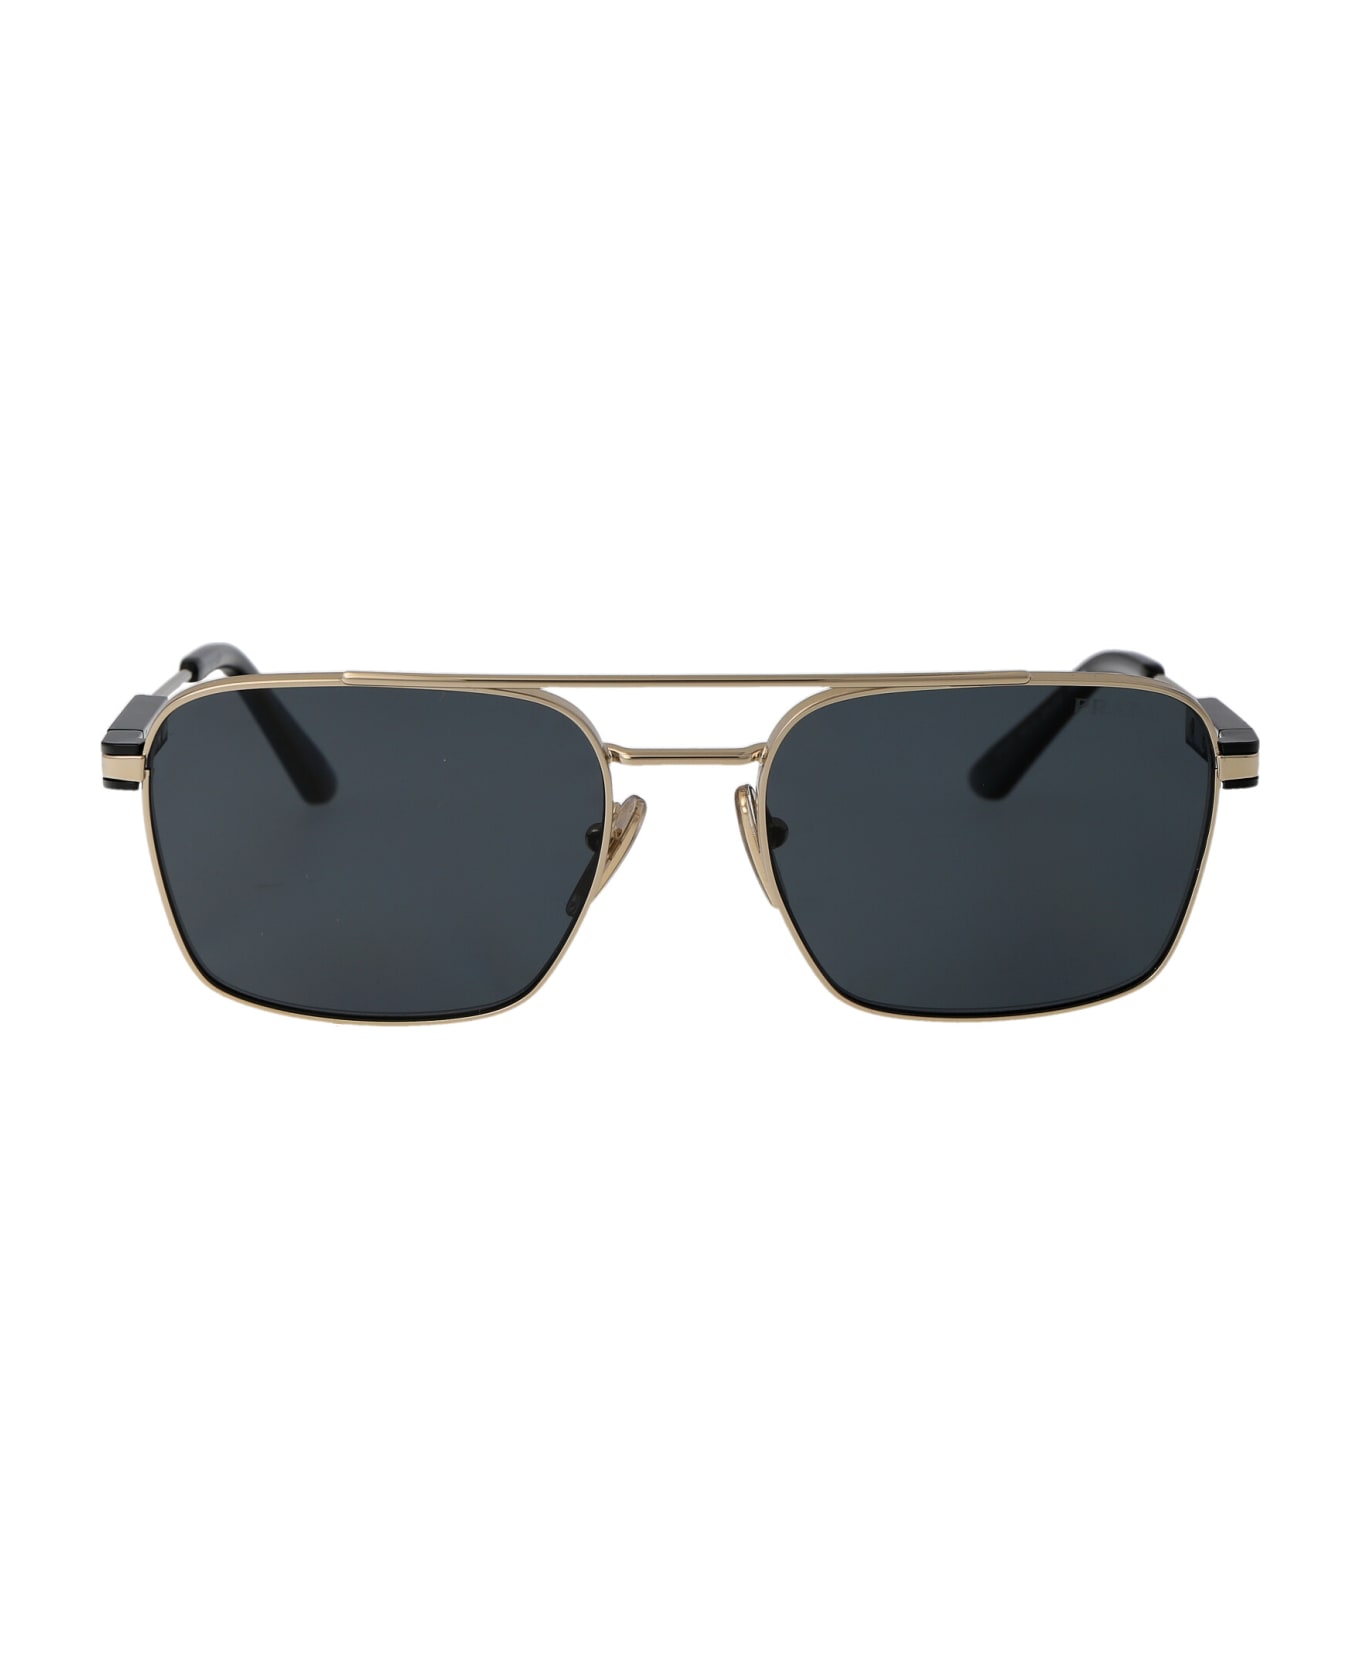 Prada Eyewear 0pr 67zs Sunglasses - ZVN09T Pale Gold